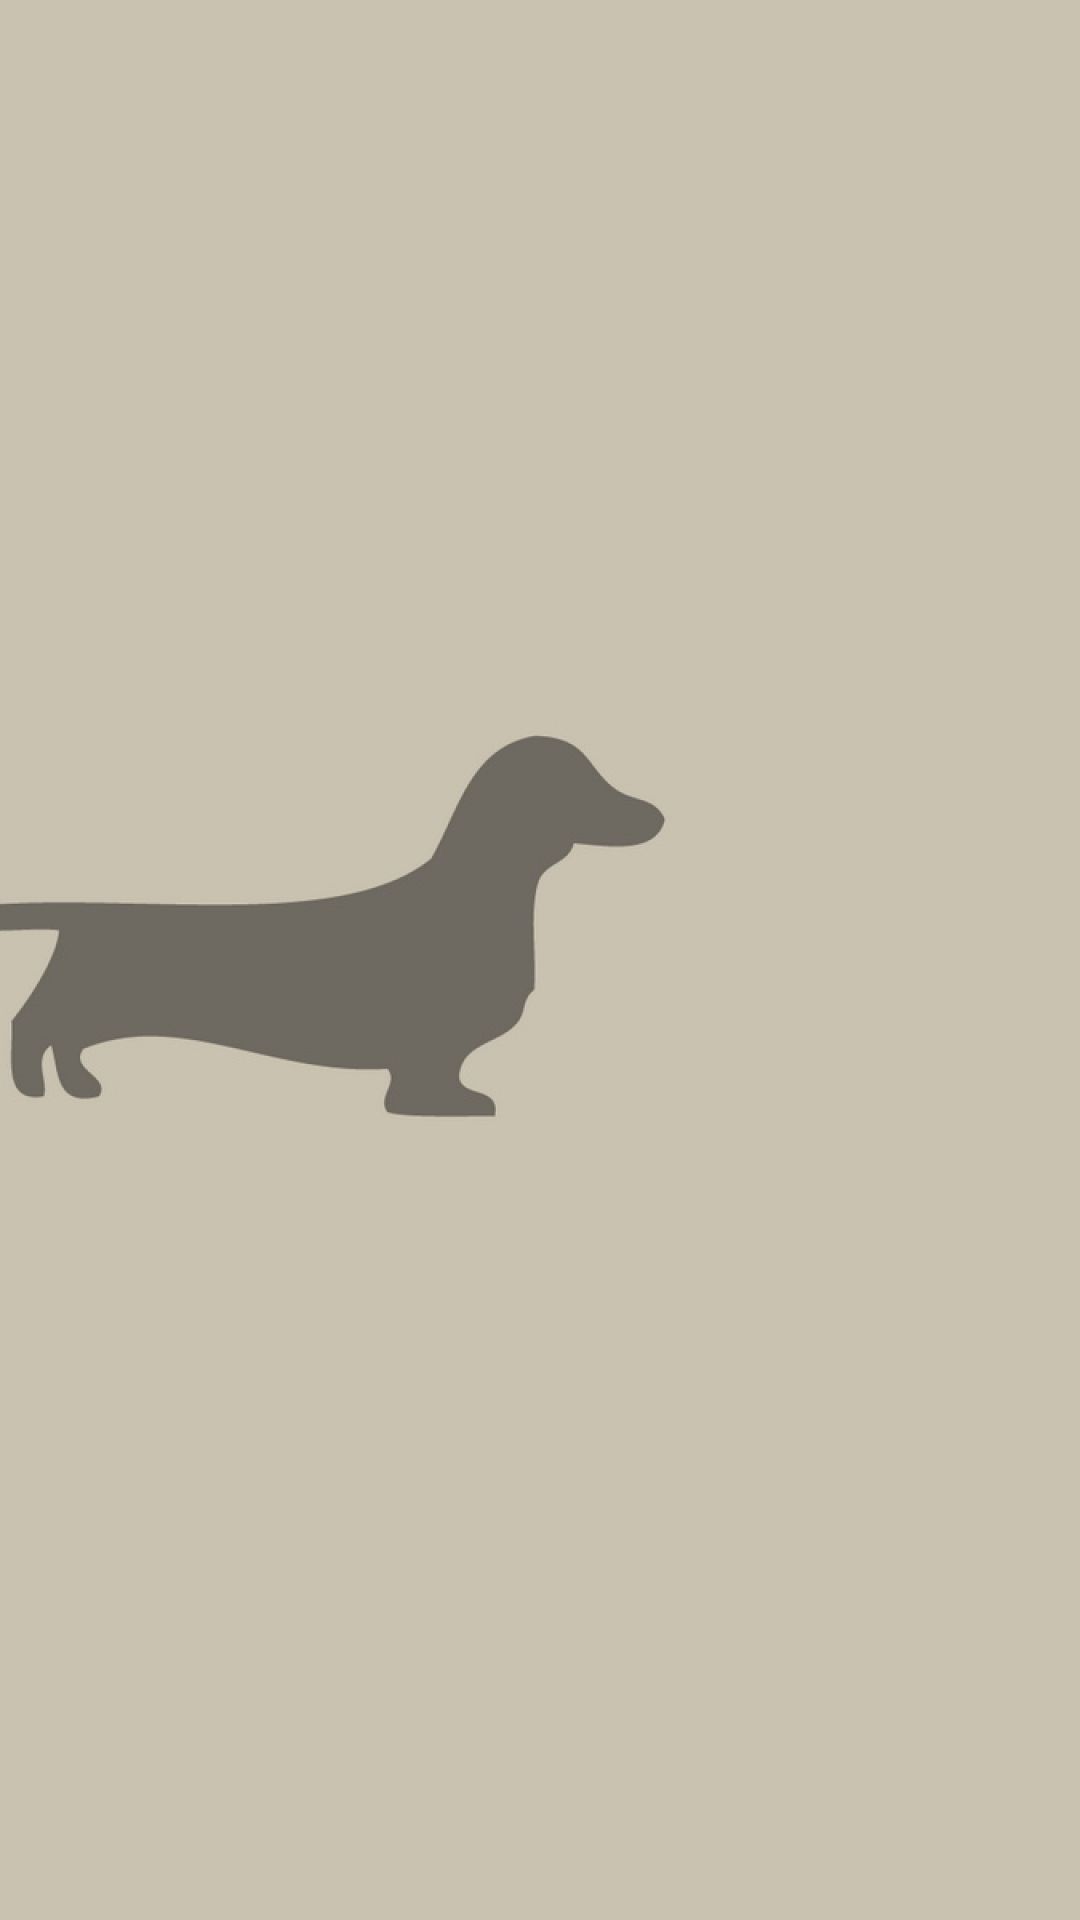 Dog. 9 Animals Minimalistic Wallpaper for iPhone